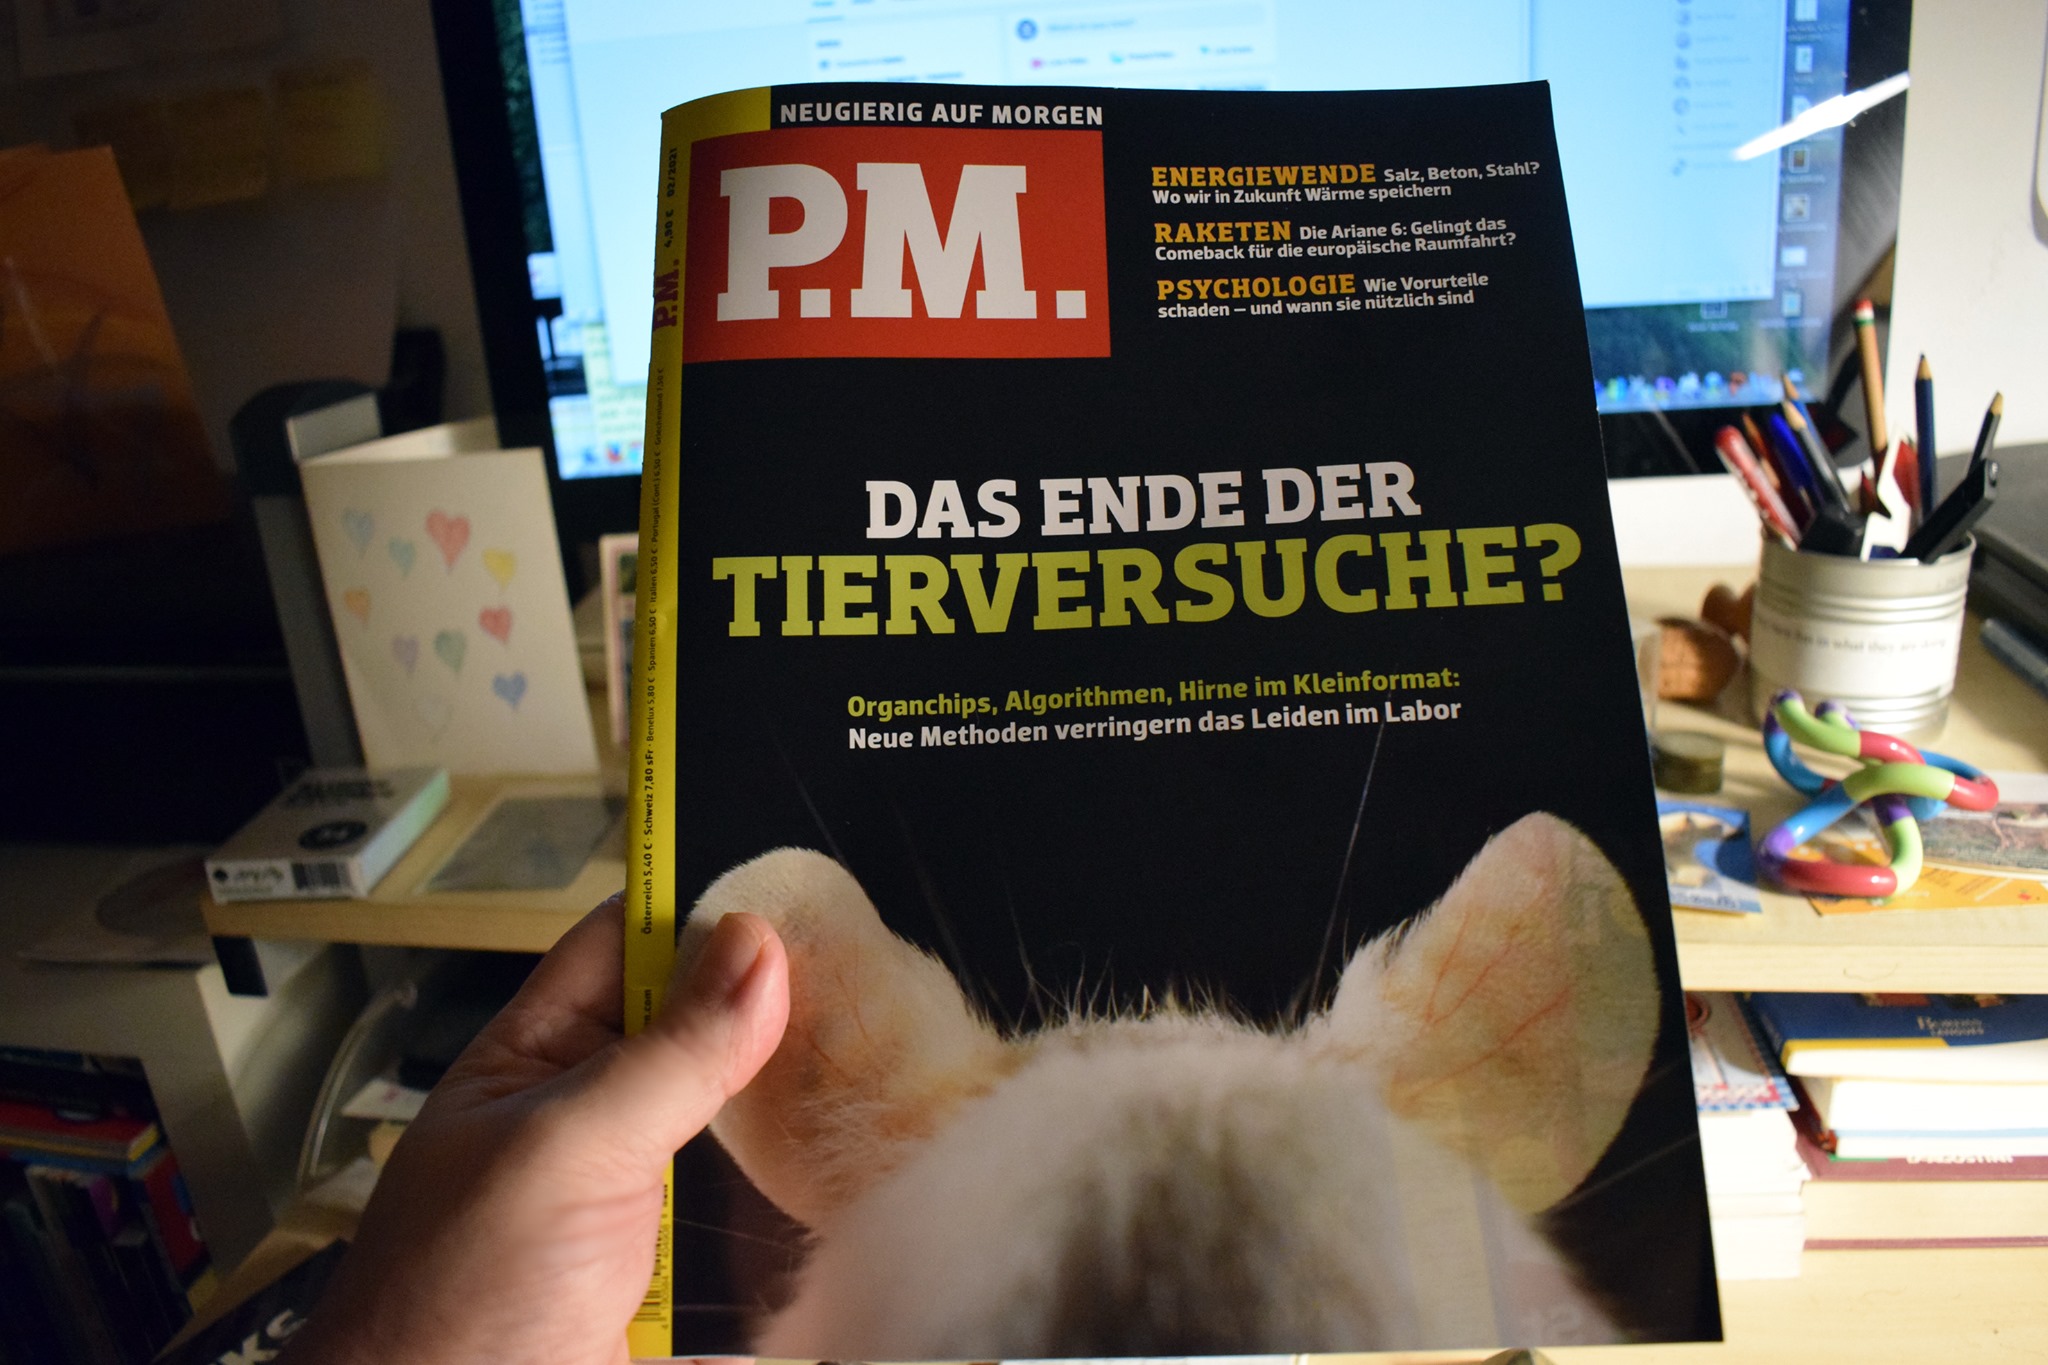 PM magazine